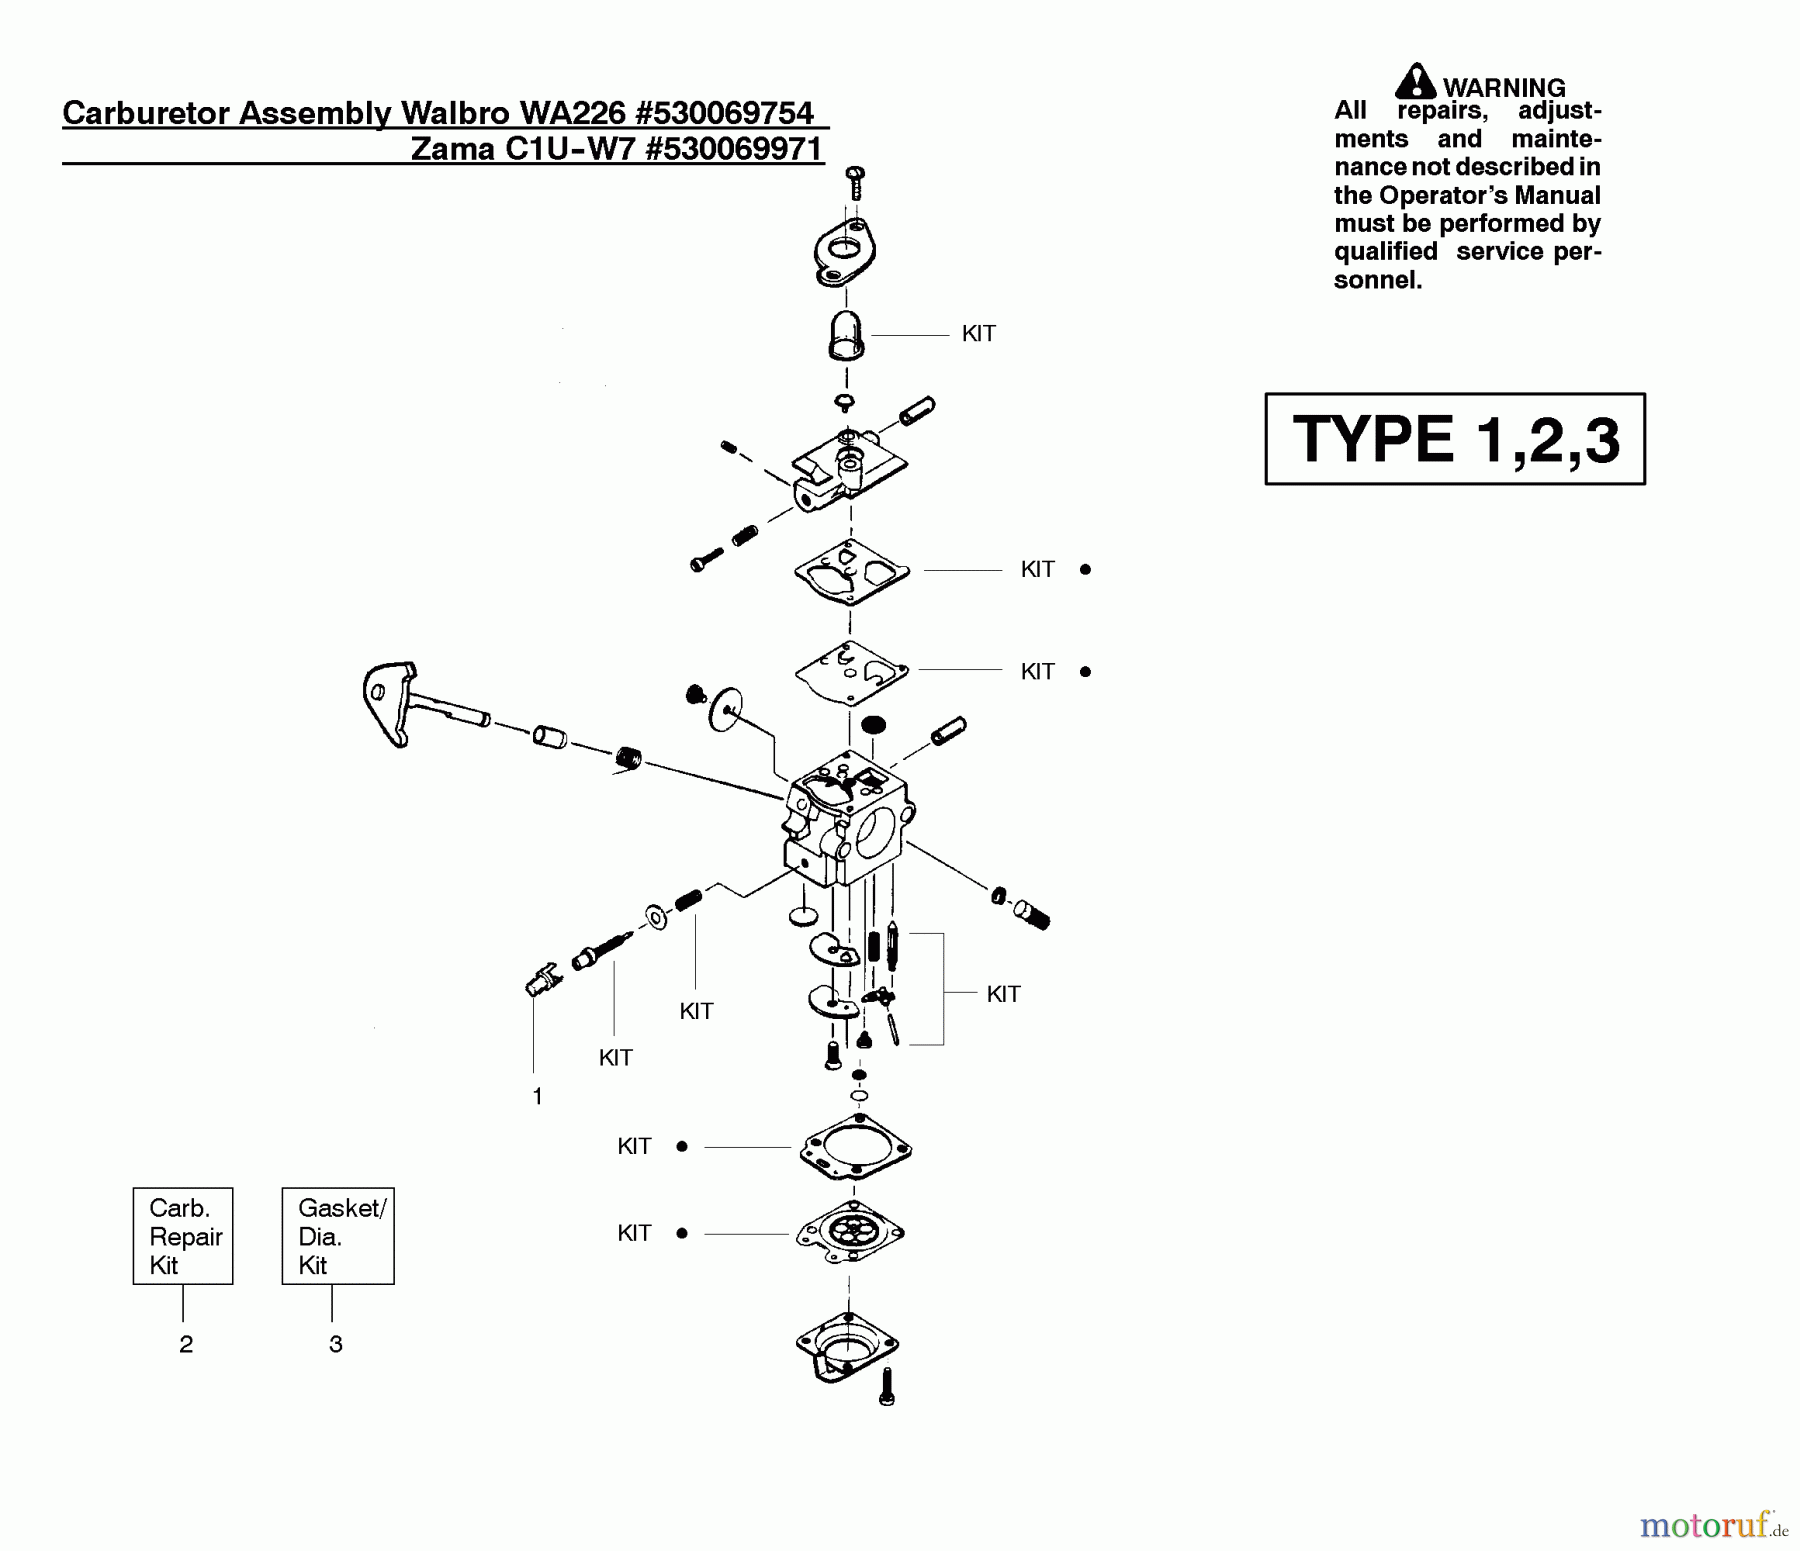  Poulan / Weed Eater Motorsensen, Trimmer PL500 (Type 4) - Weed Eater String Trimmer Carburetor Assembly (WT226) P/N 530069754, (Zama C1U-W70) P/N 530069971